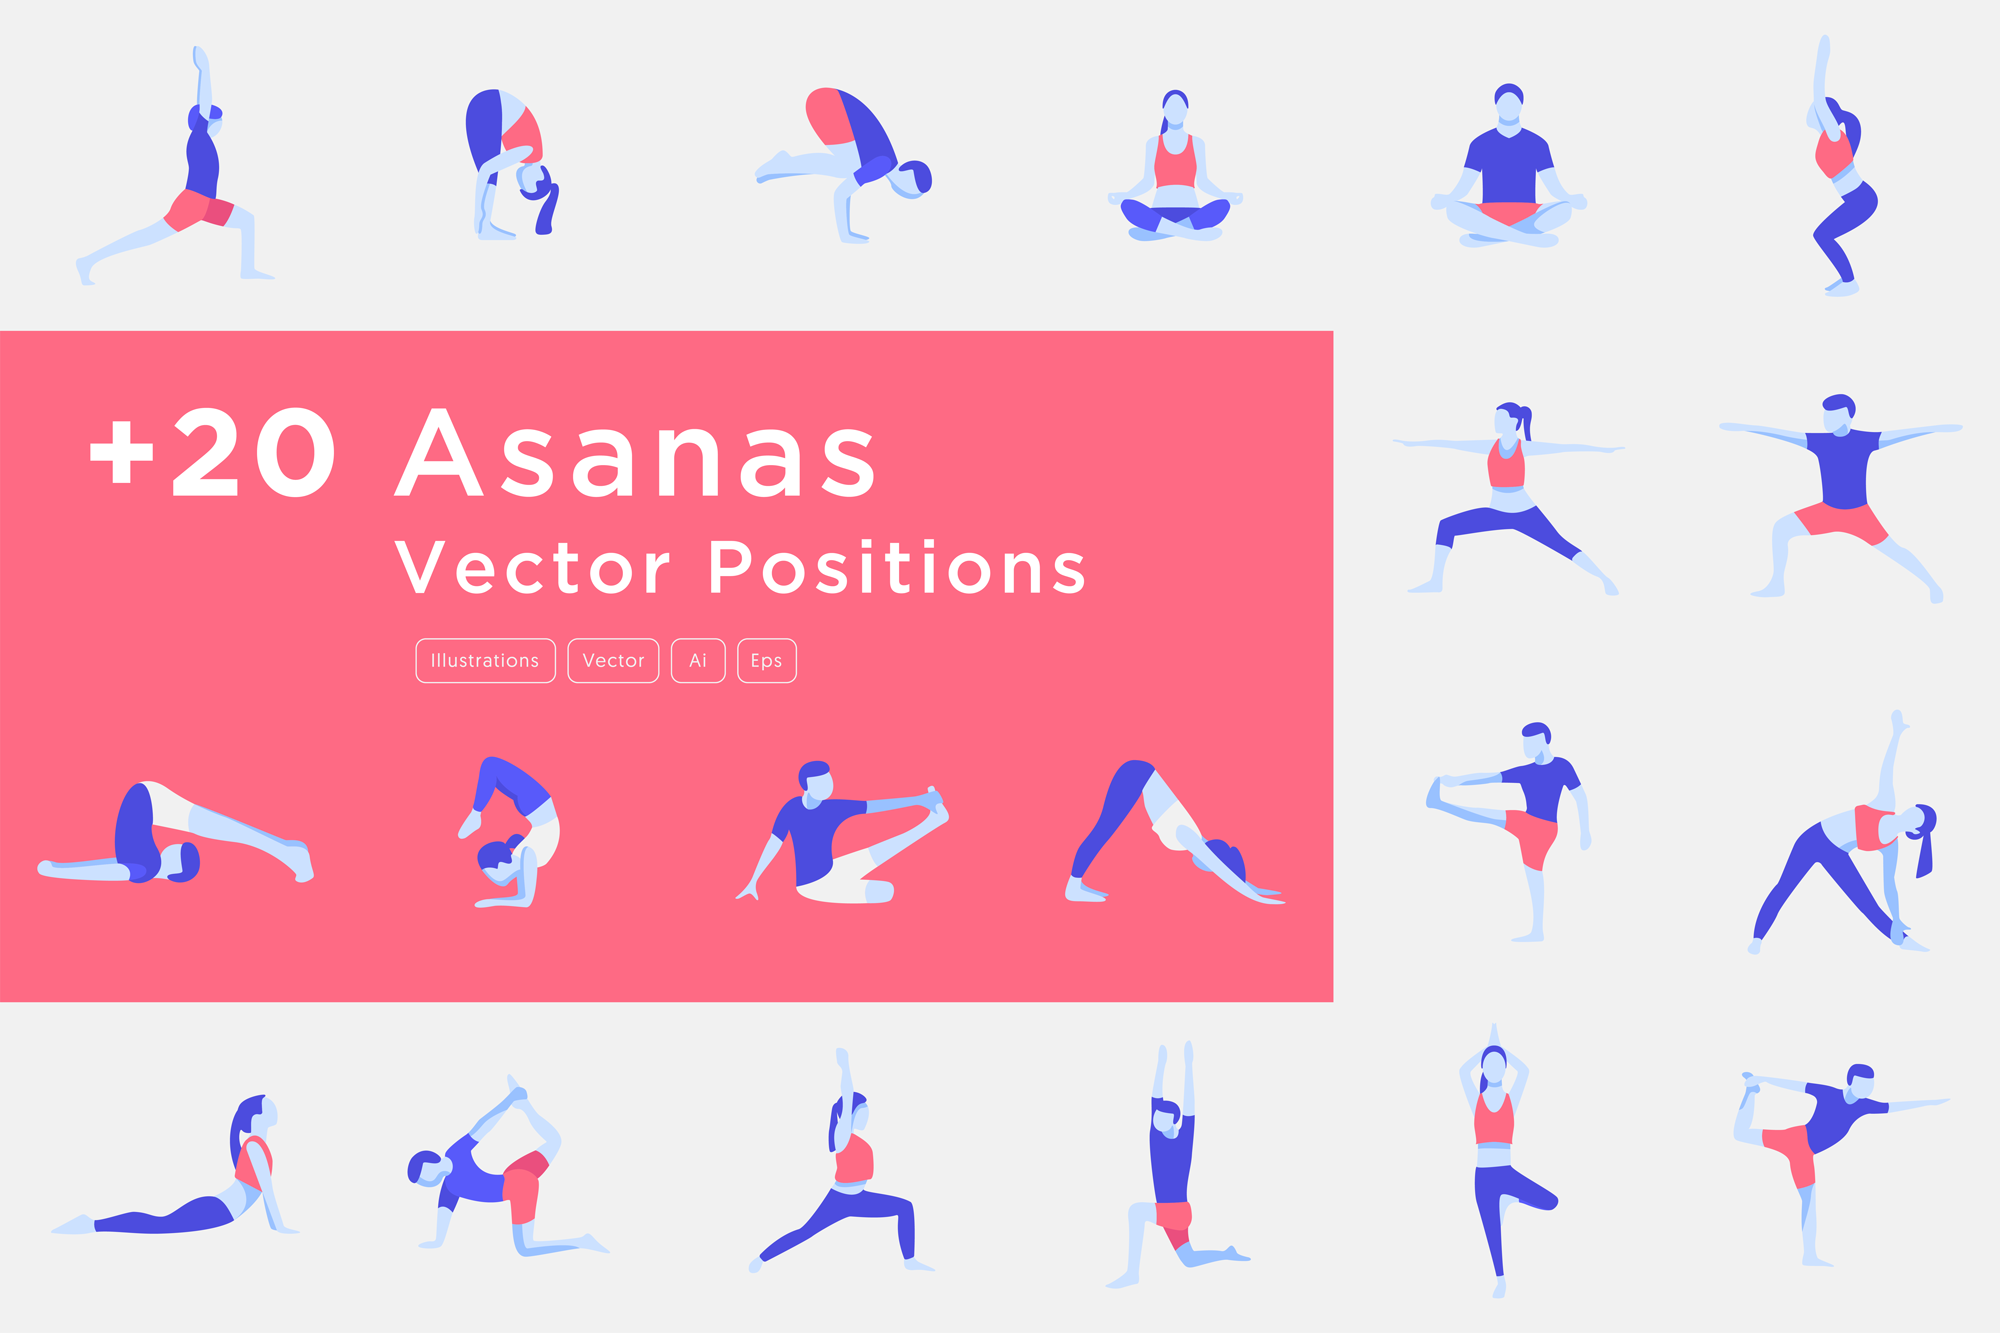 yoga poses vector